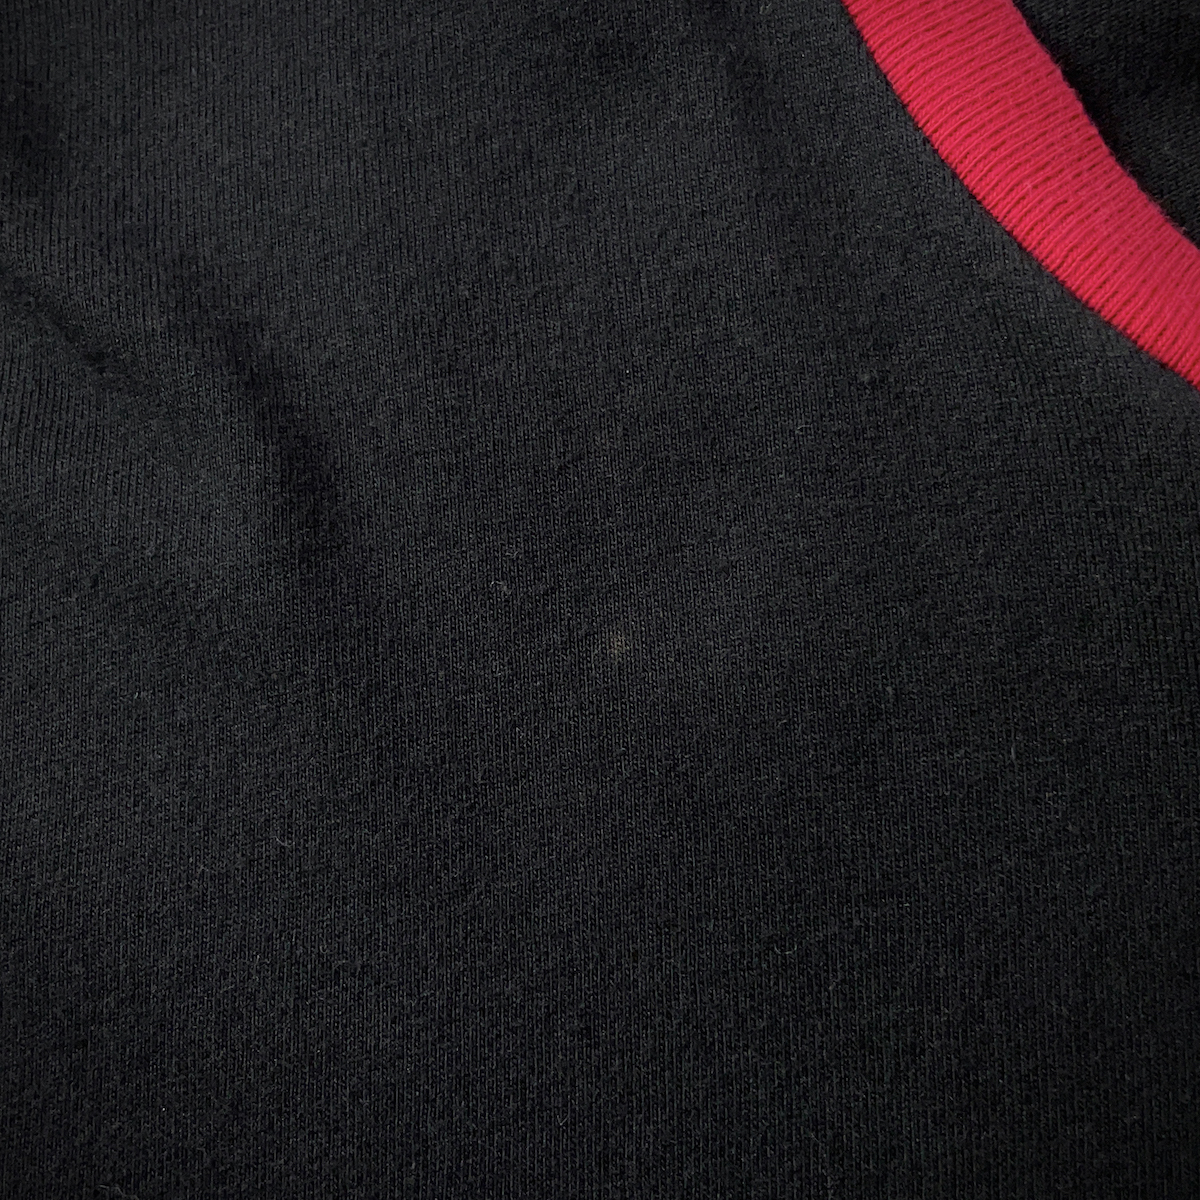 RALPH LAUREN メンズ XXL 2XL 相当 ポロジーンズ 半袖 ボックス ロゴ 刺繍 リンガー Tシャツ 黒 ブラック 赤 レッド 丸首 オーバーサイズ L